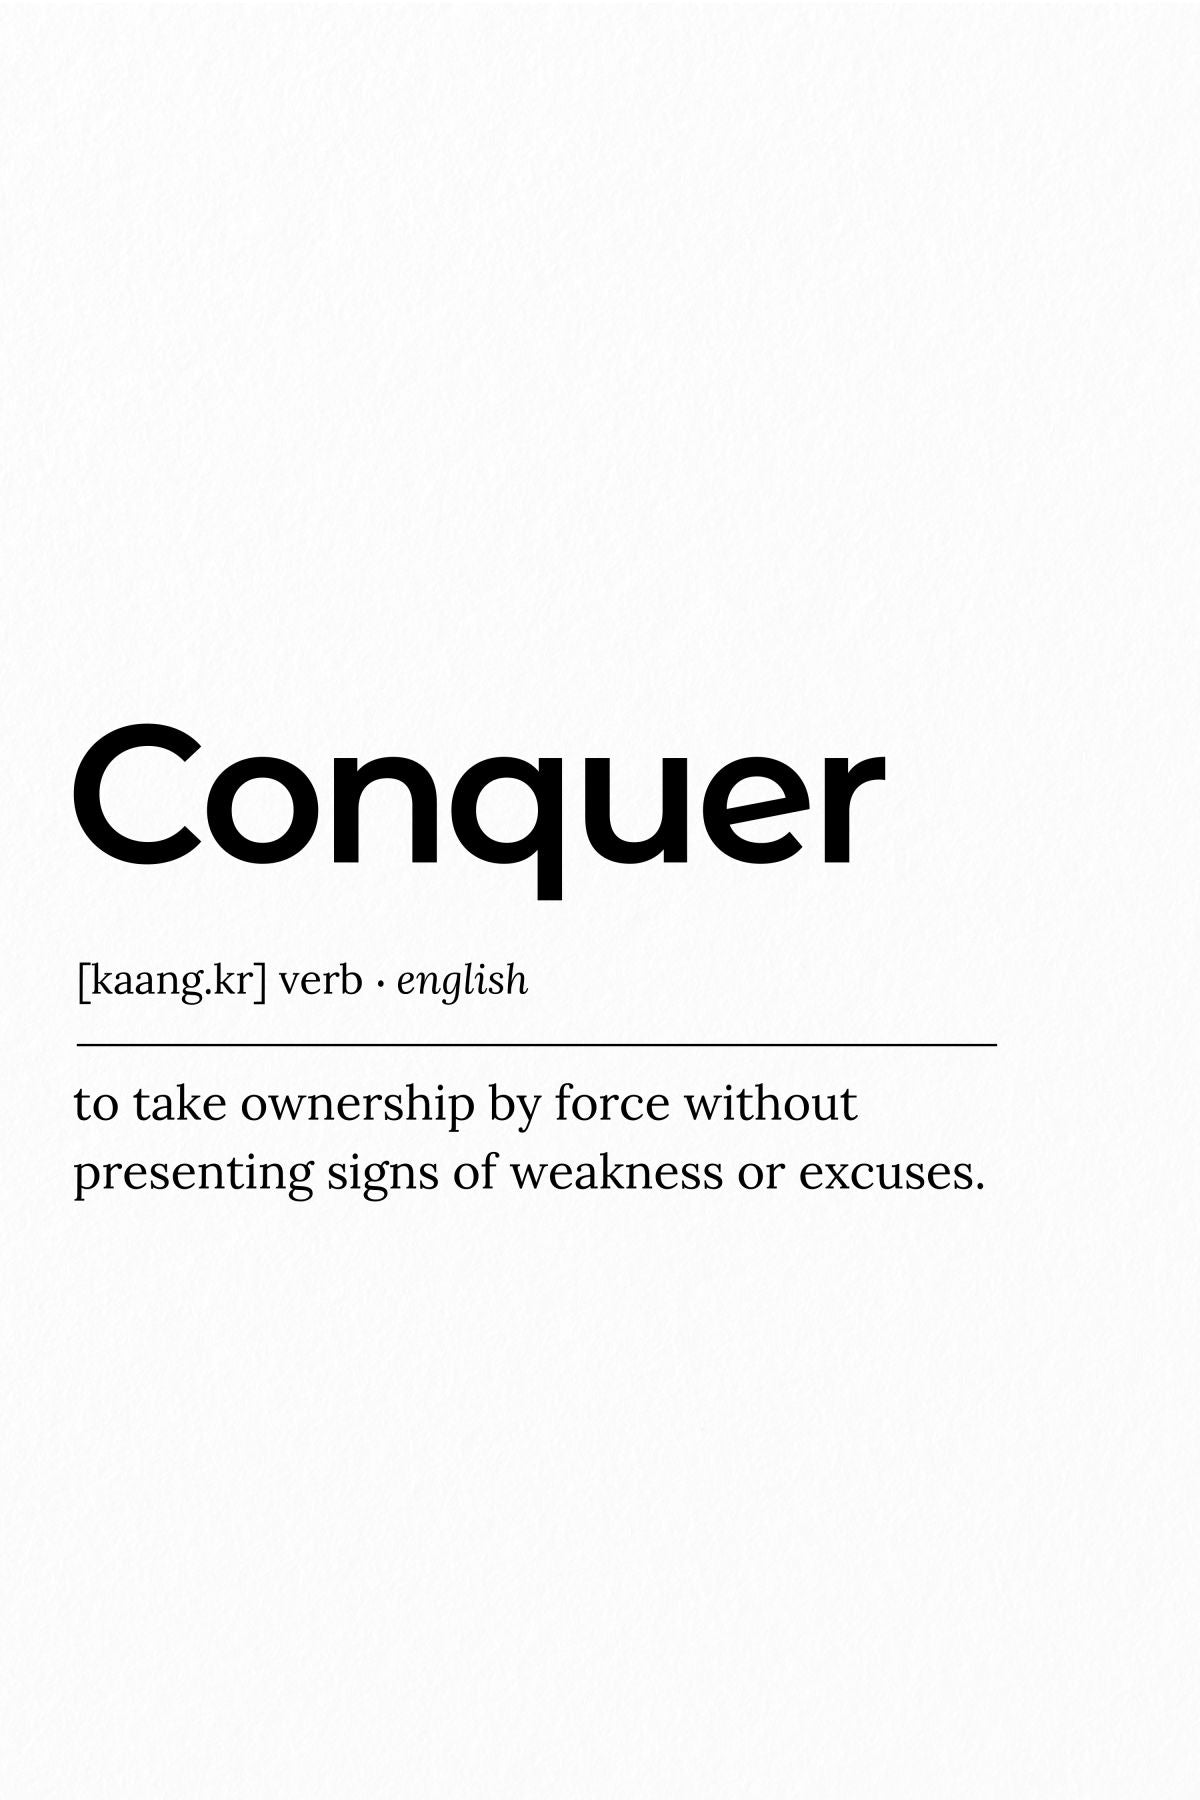 Conquer Definition